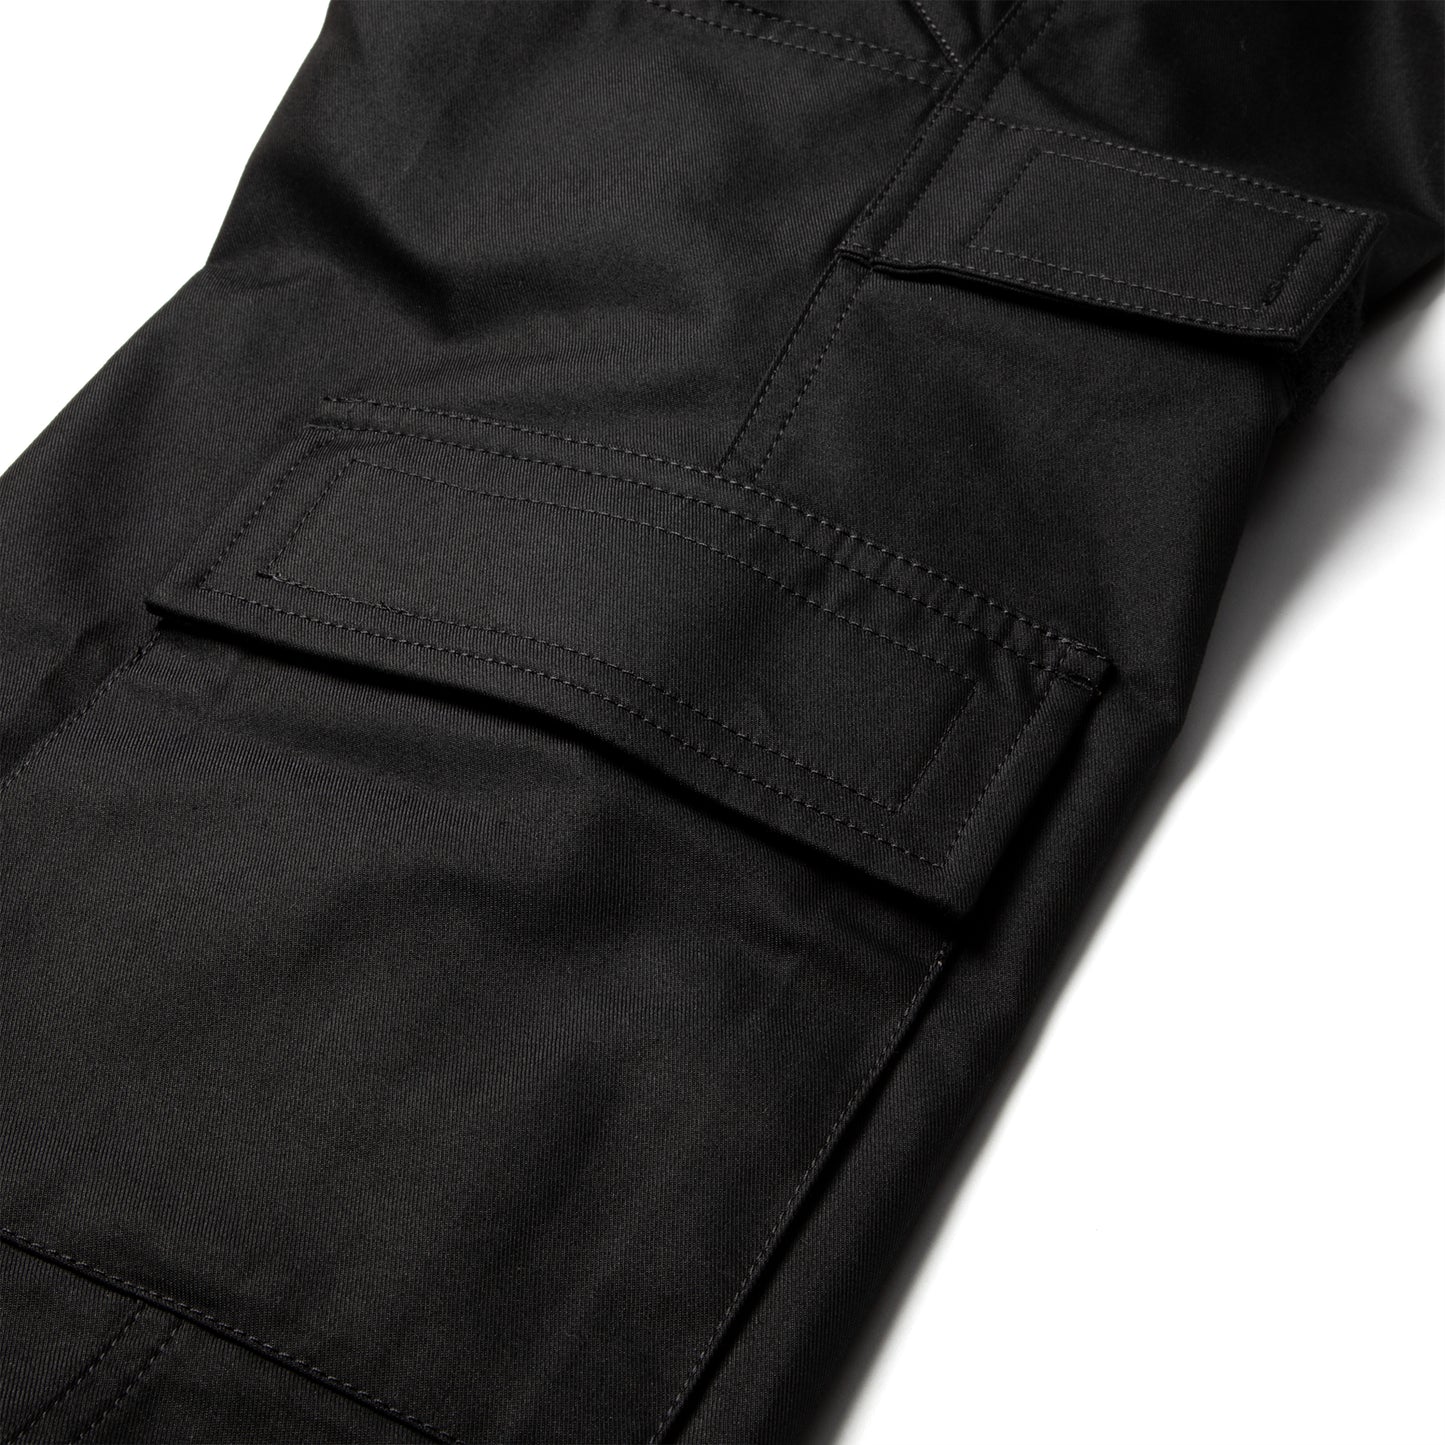 1017 ALYX 9SM Tactical Pant (Black)